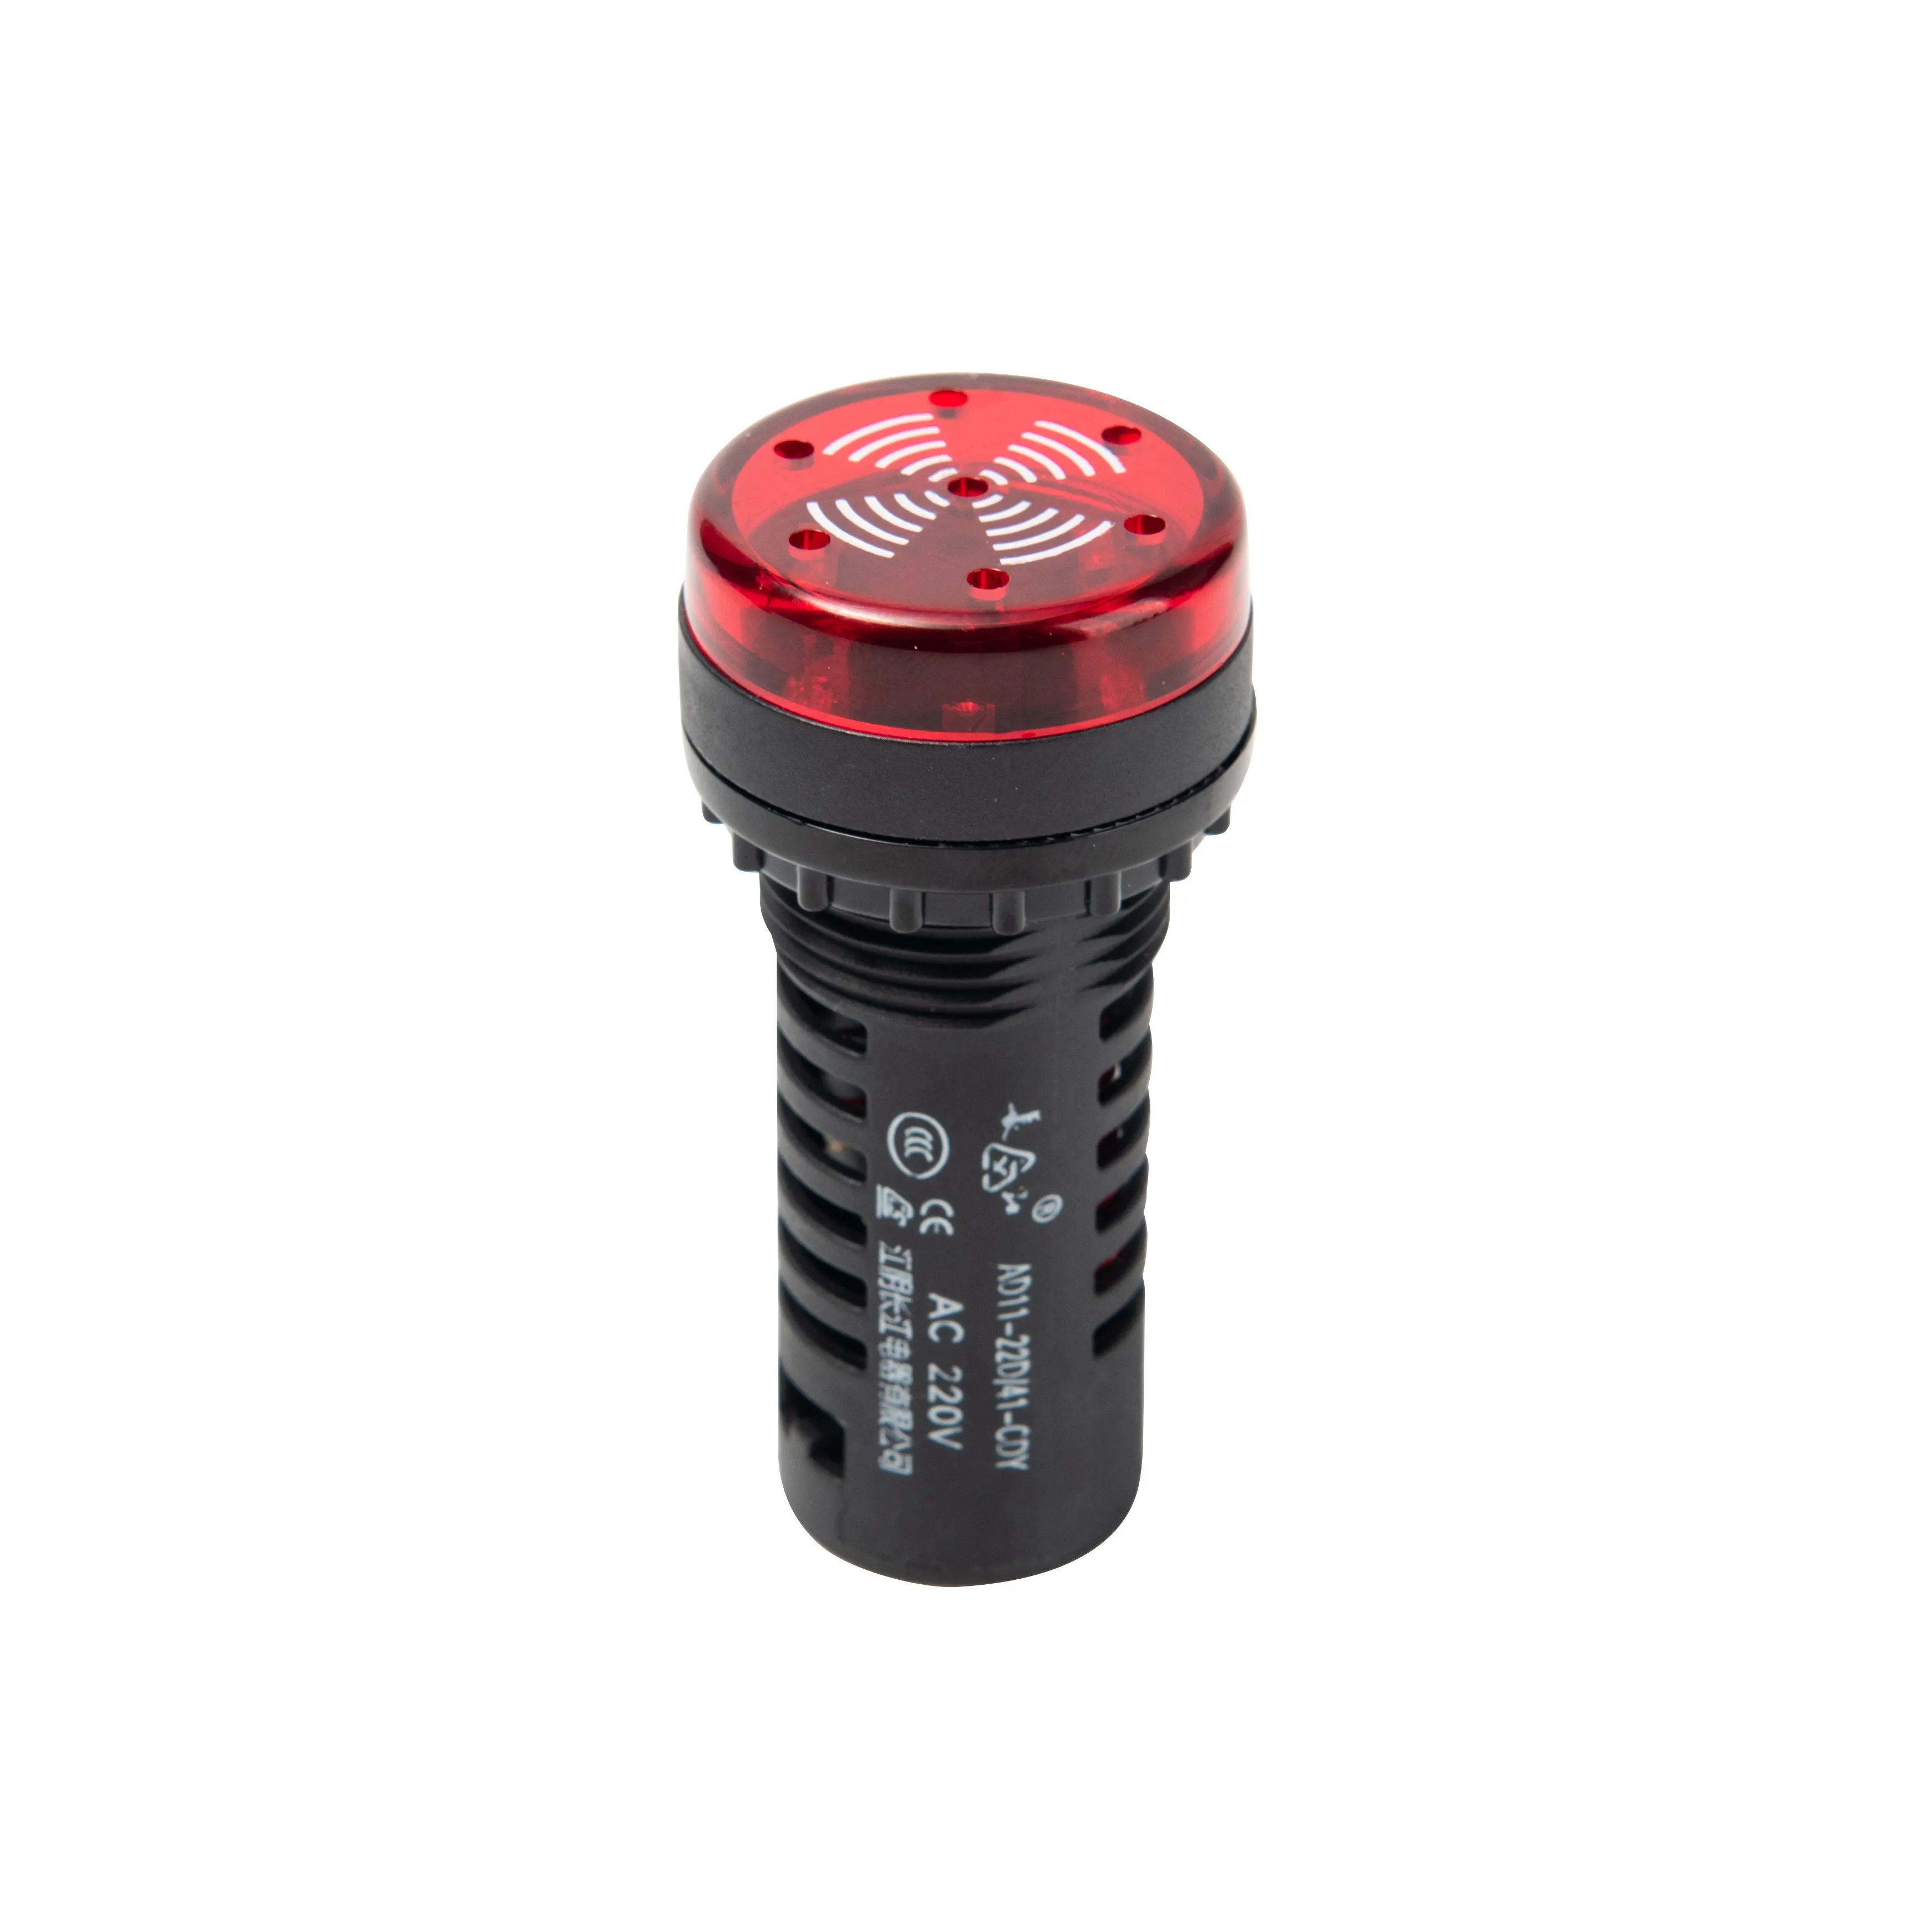 AD11-22 series 22mm red 220V Indicator Light led flash buzzer